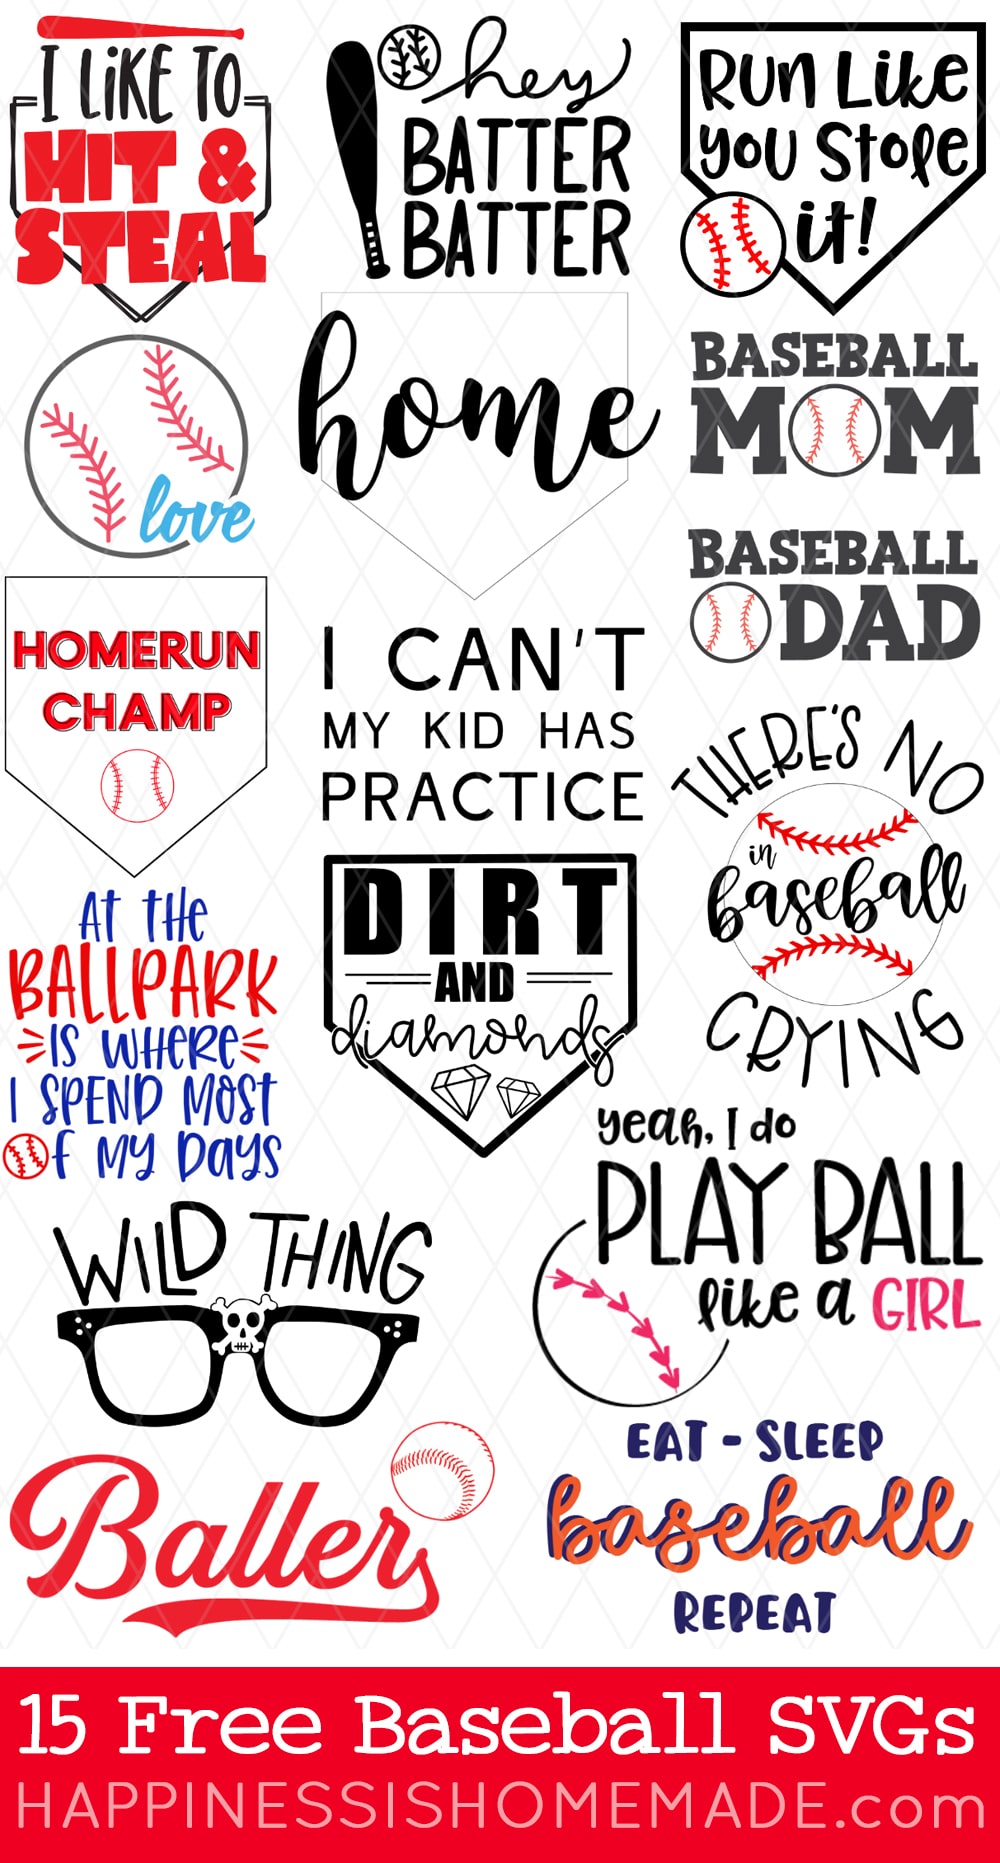 Mom's Slugger SVG  Baseball SVG Design - SVG by AM